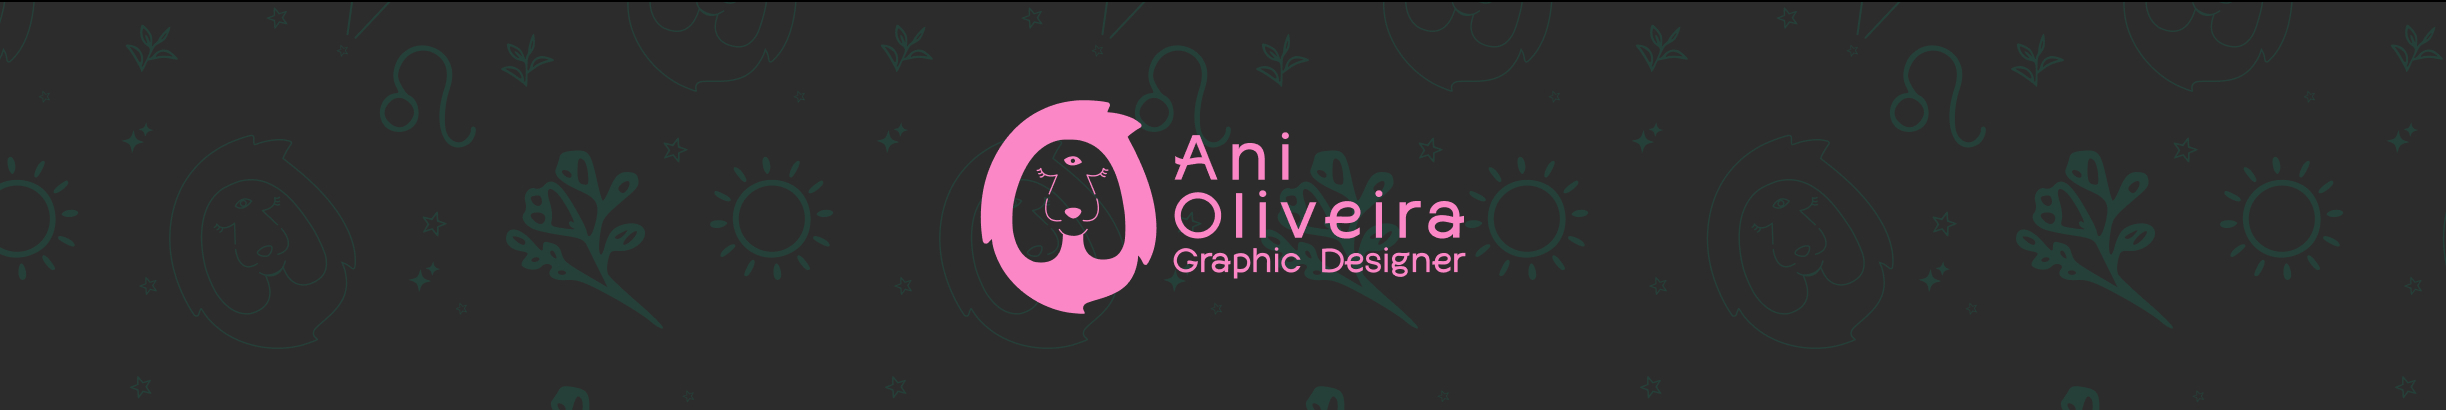 Banner profilu uživatele Ani Oliveira